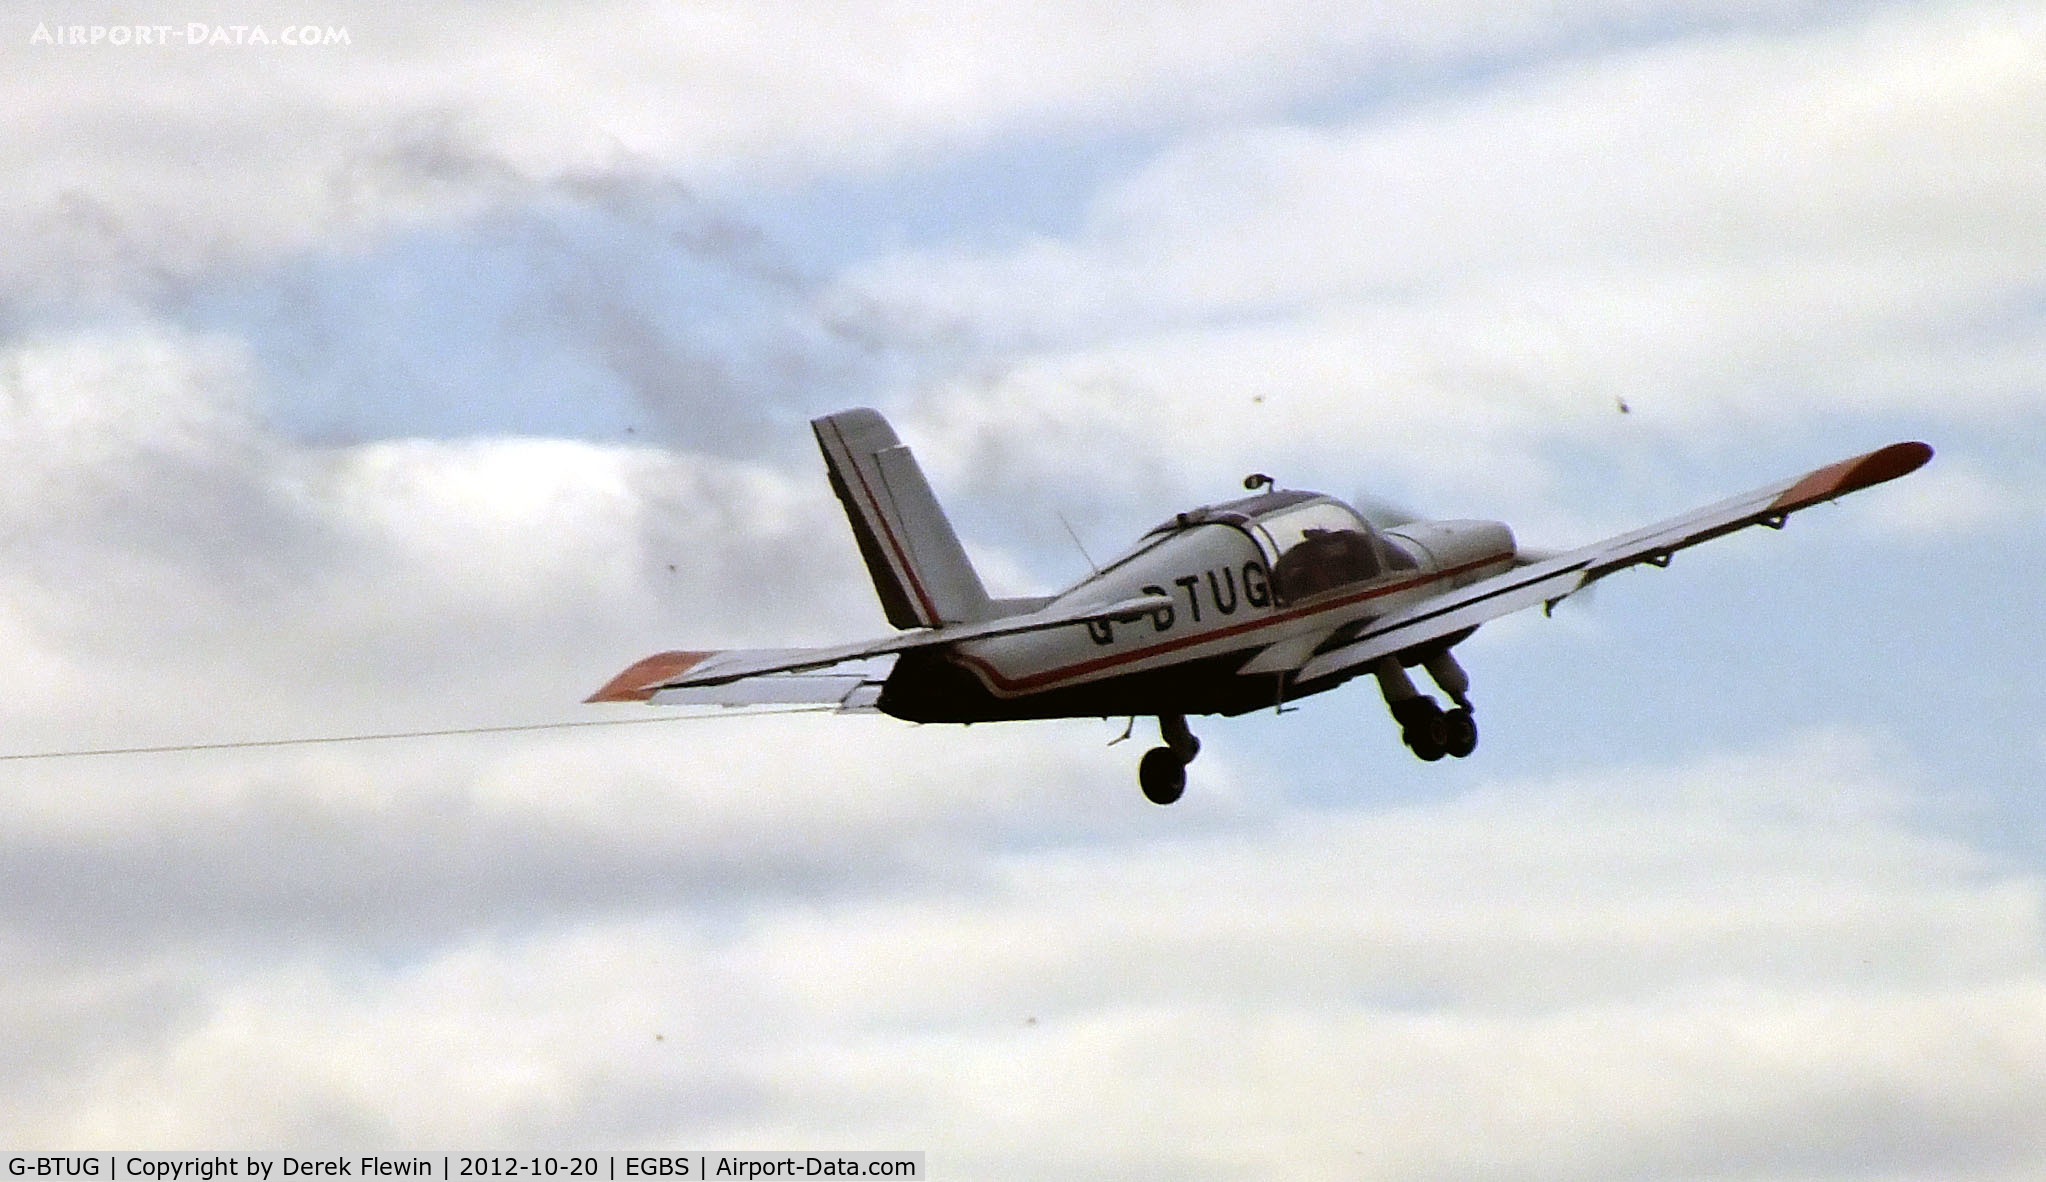 G-BTUG, 1978 Socata Rallye 180T Galerien C/N 3208, Herefordshire Gliding Club Tug Aircraft, EGBS resident.